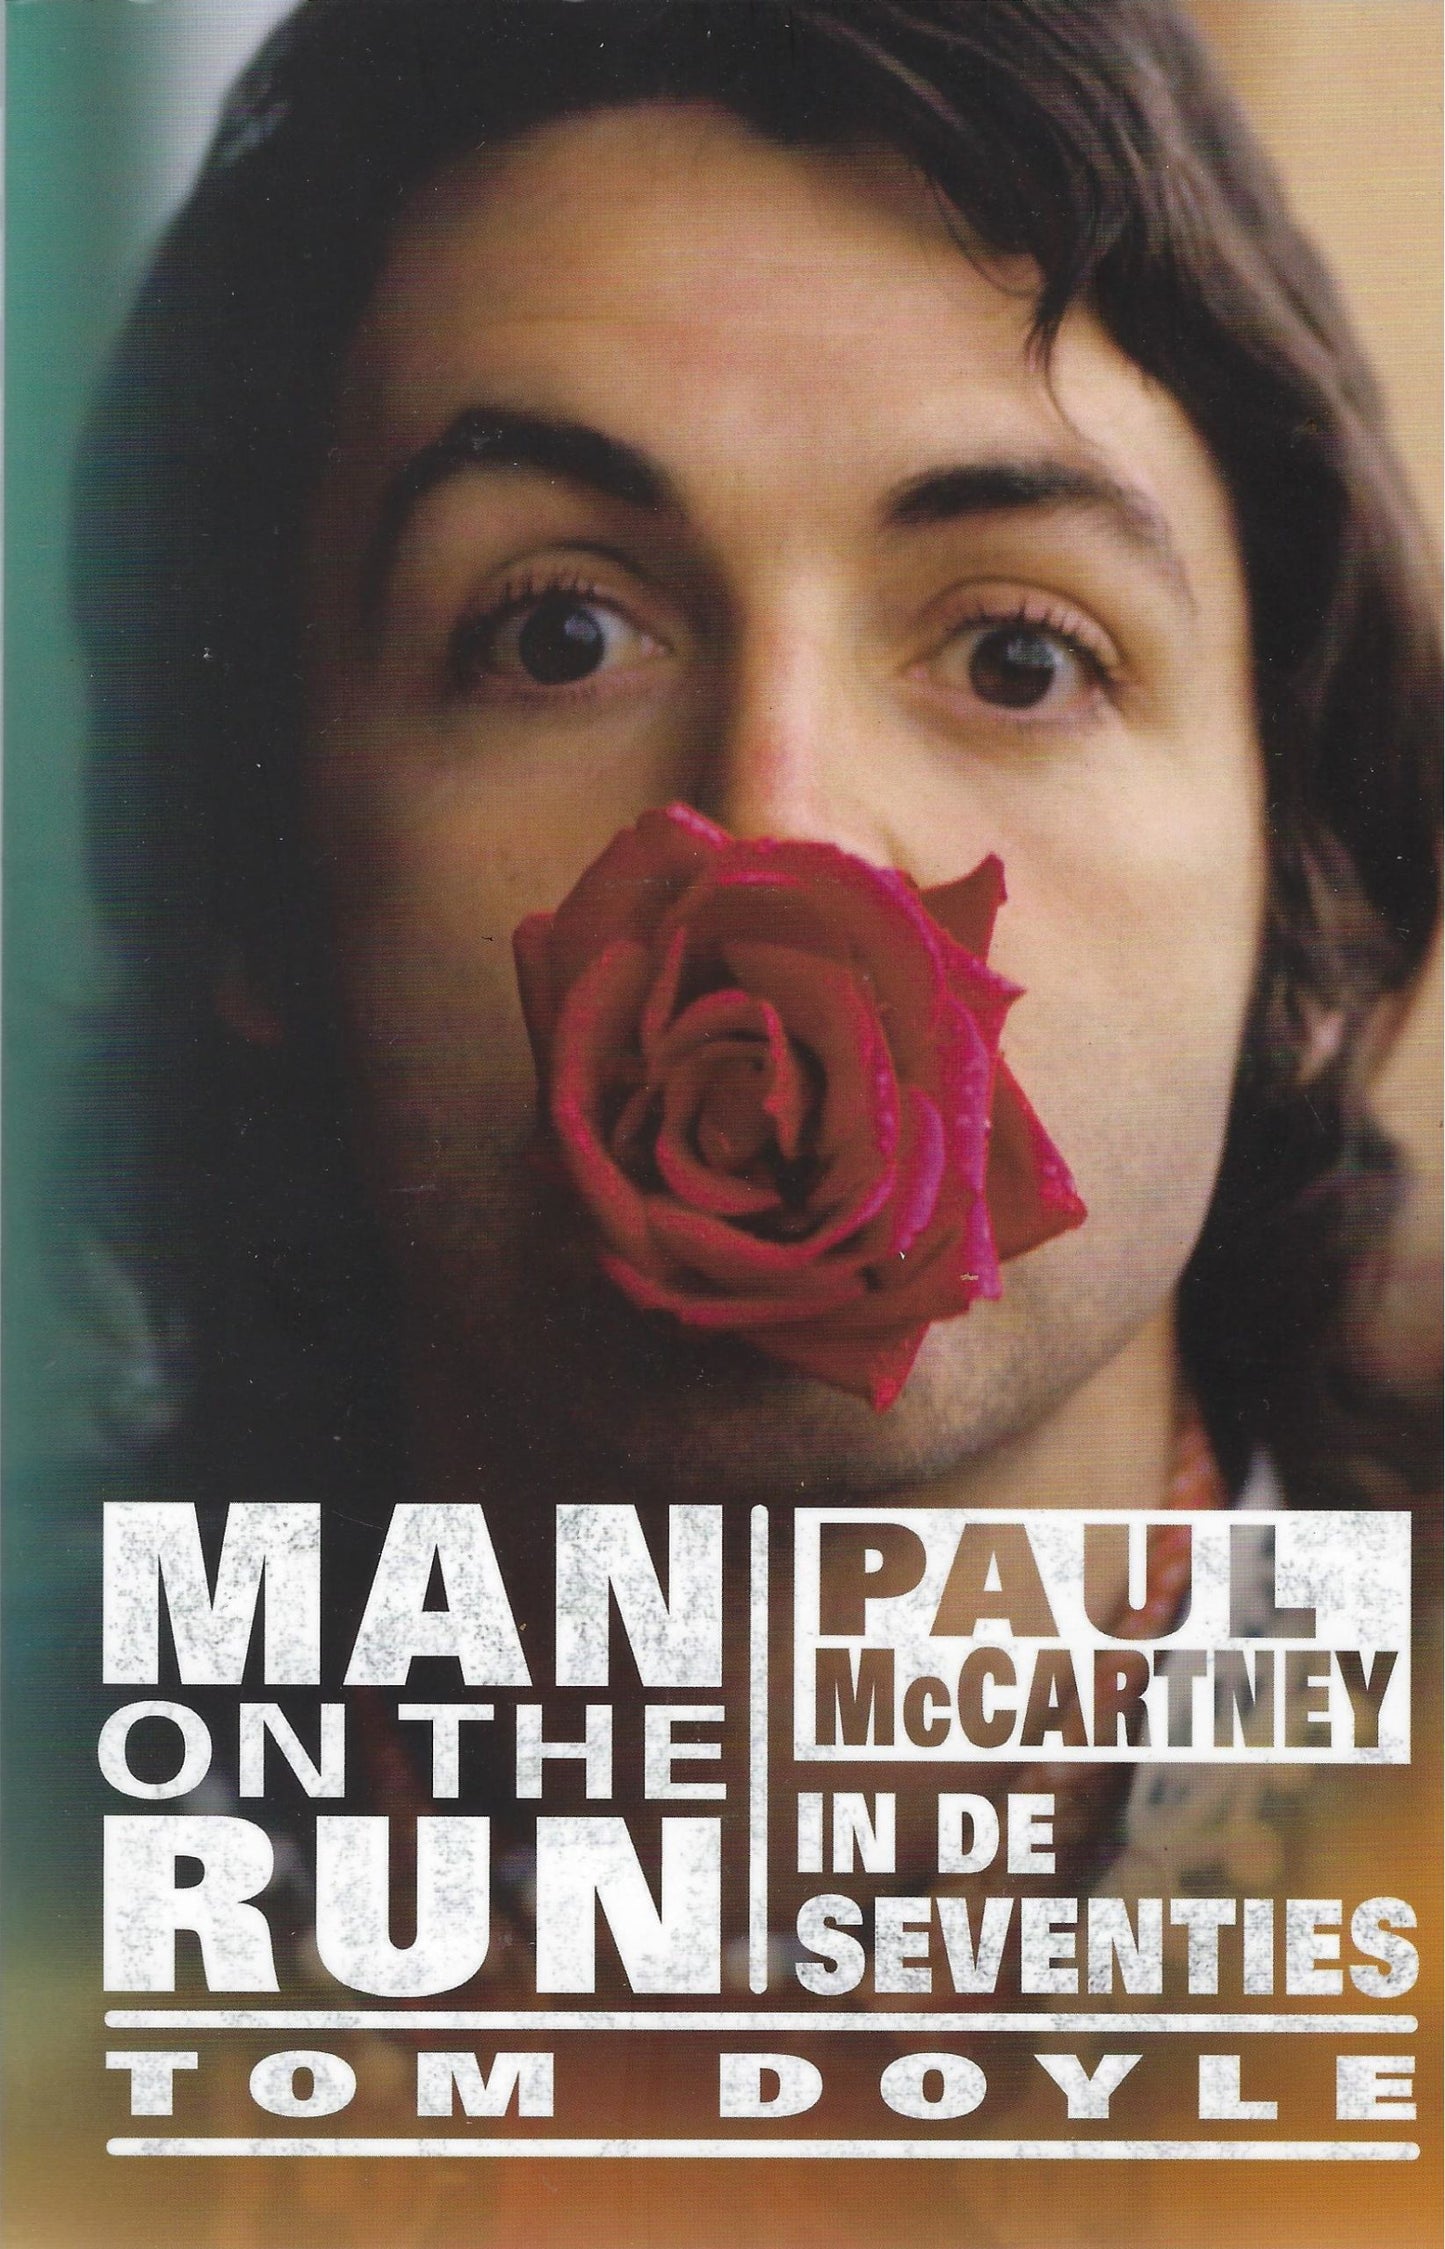 Man on the run - Paul McCartney in the seventies